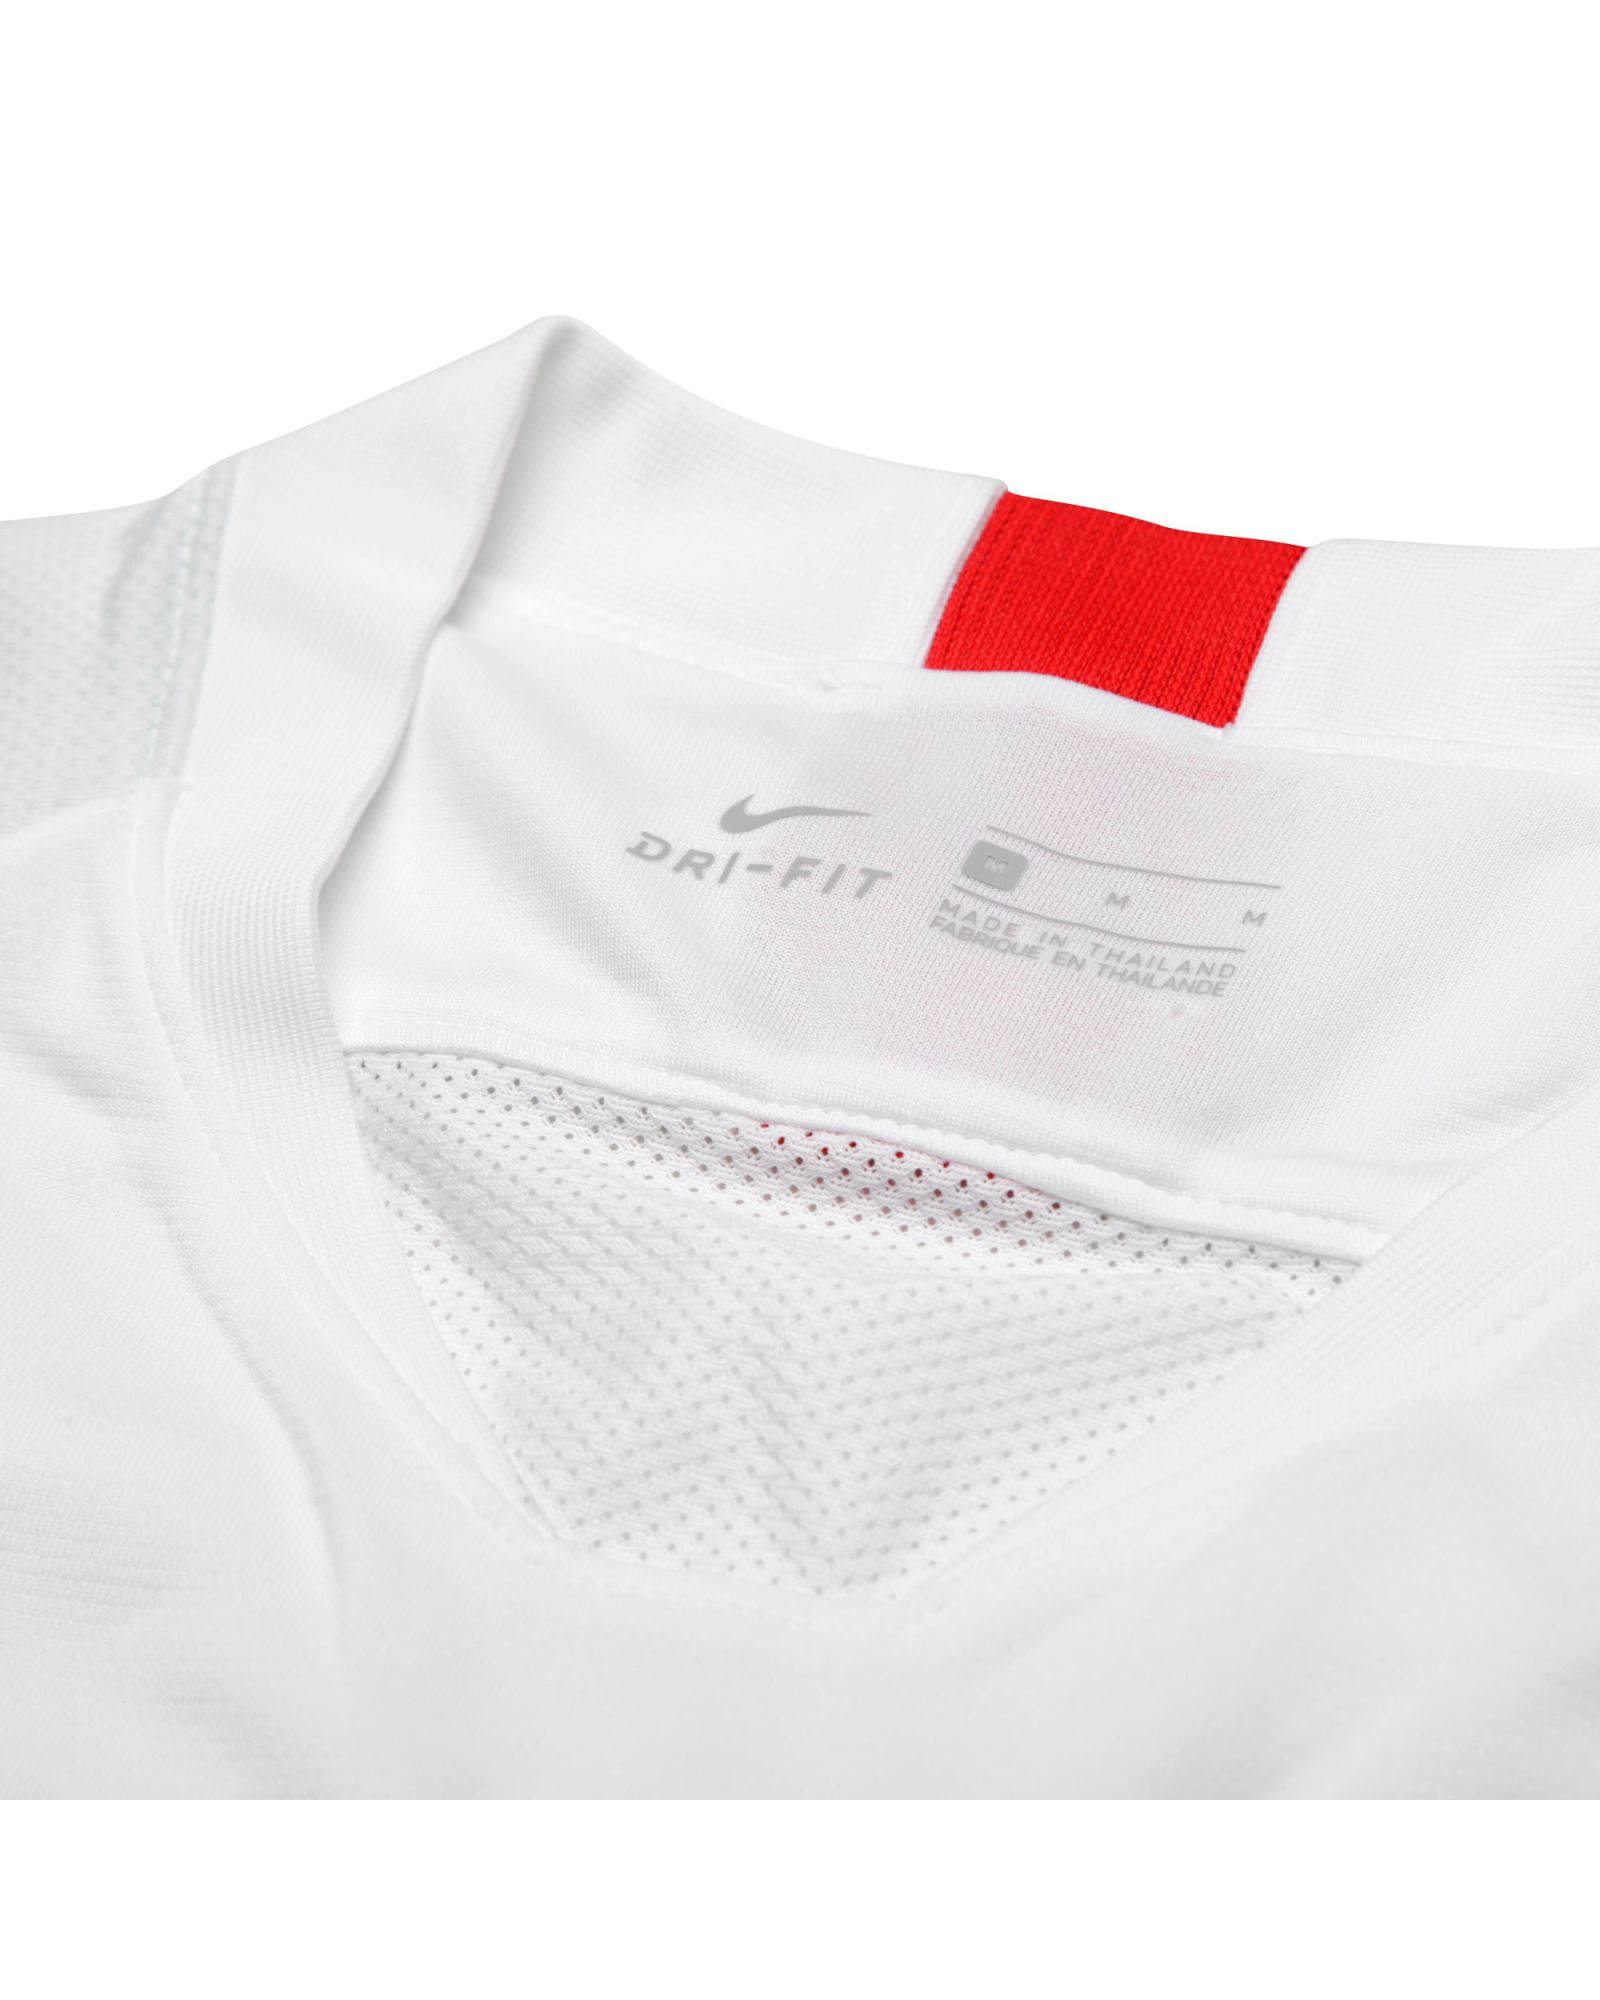 Camiseta de Training PSG 2019/2020 Dri-FIT Strike Blanco - Fútbol Factory